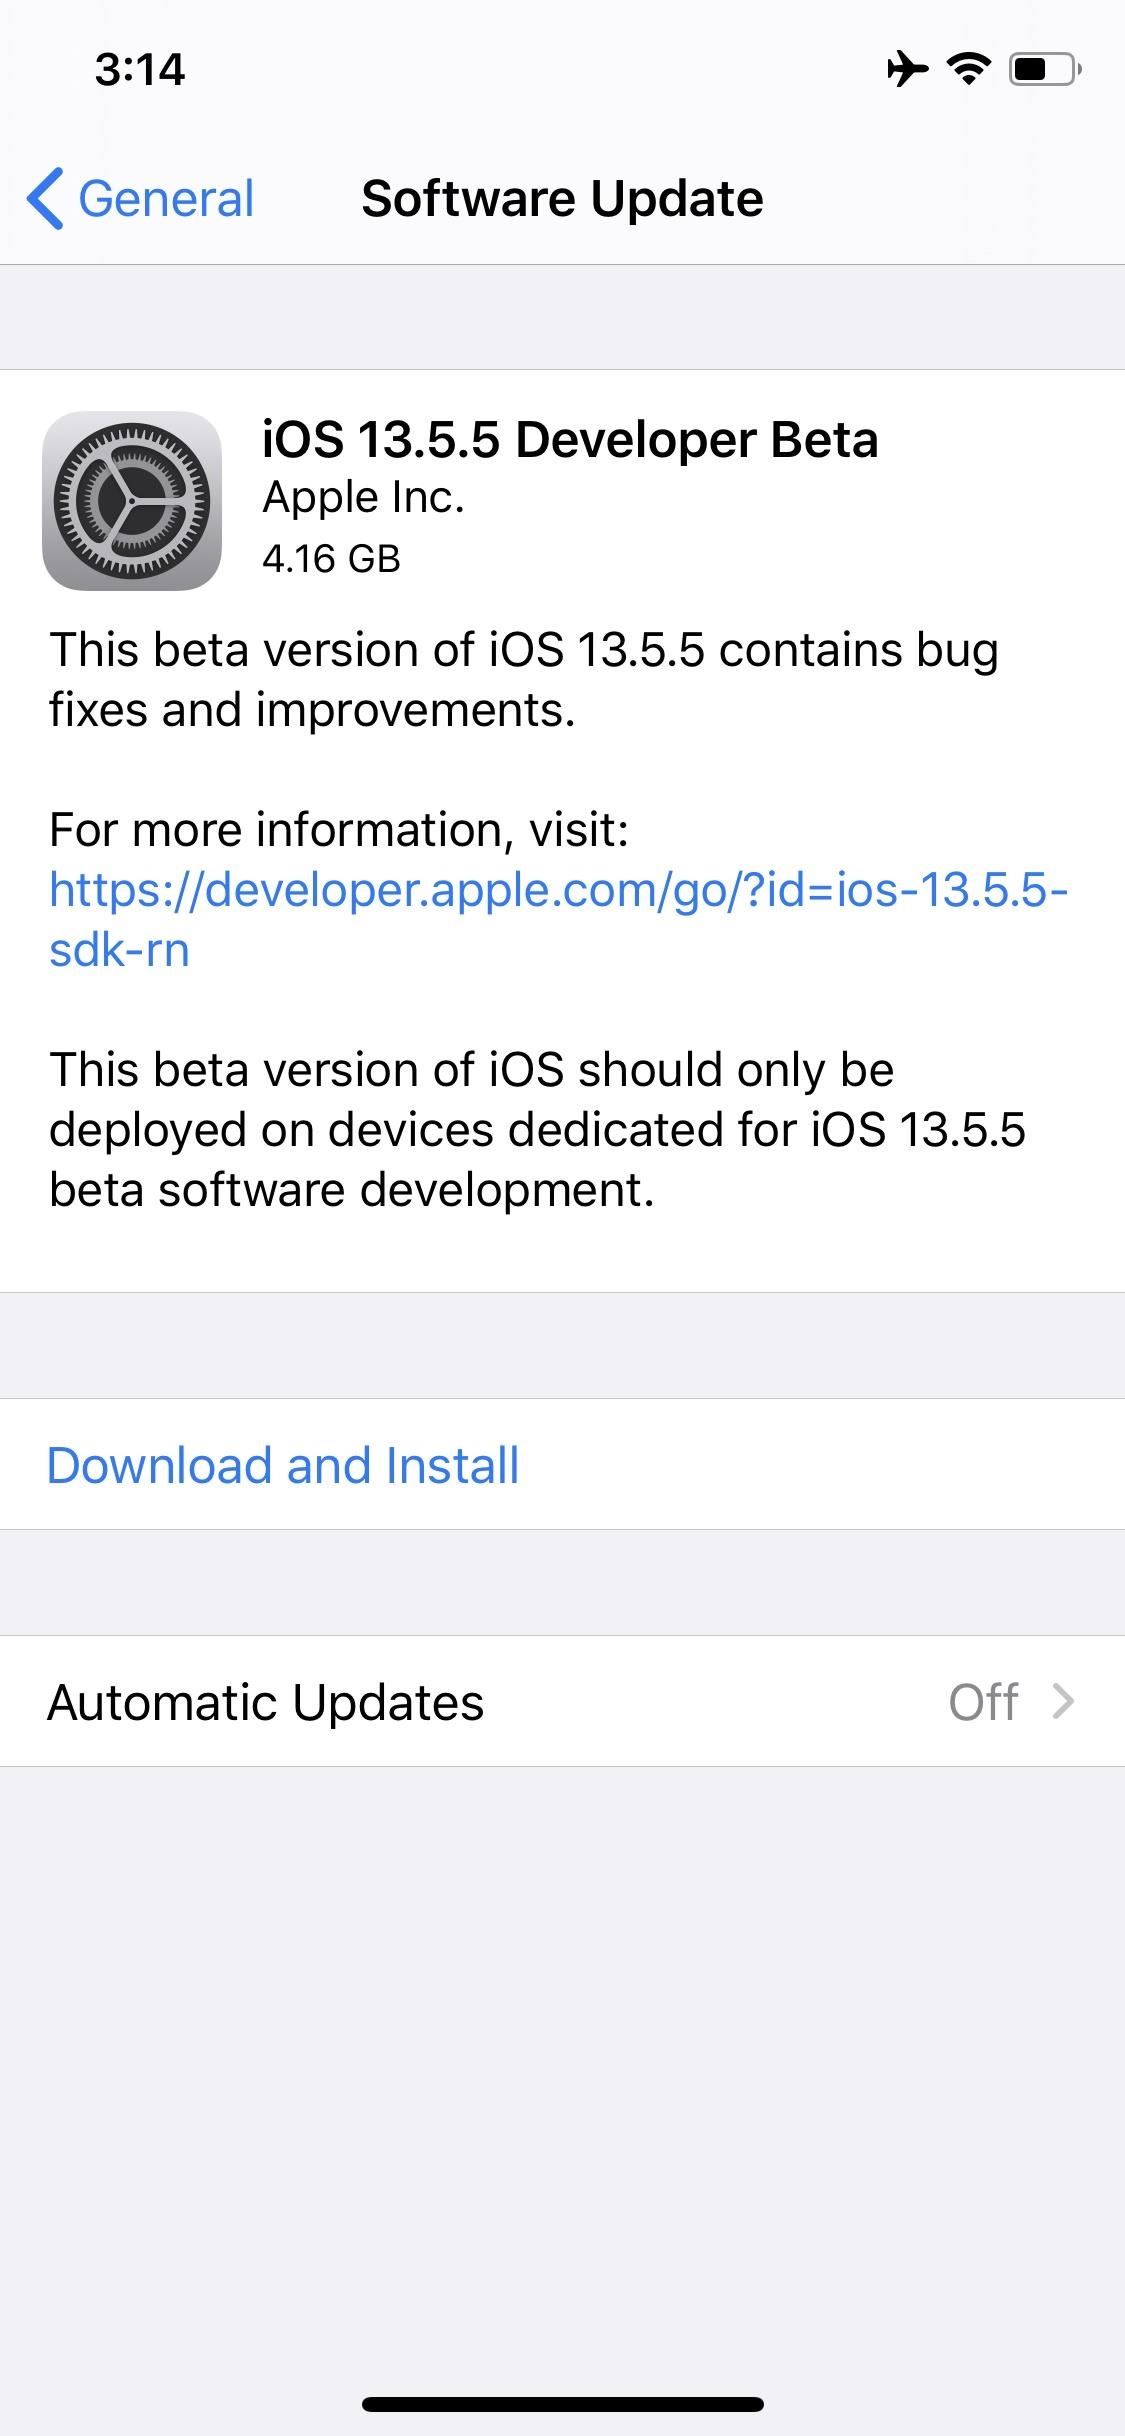 Apple Releases iOS 13.5.5 Developer Beta 1 for iPhone